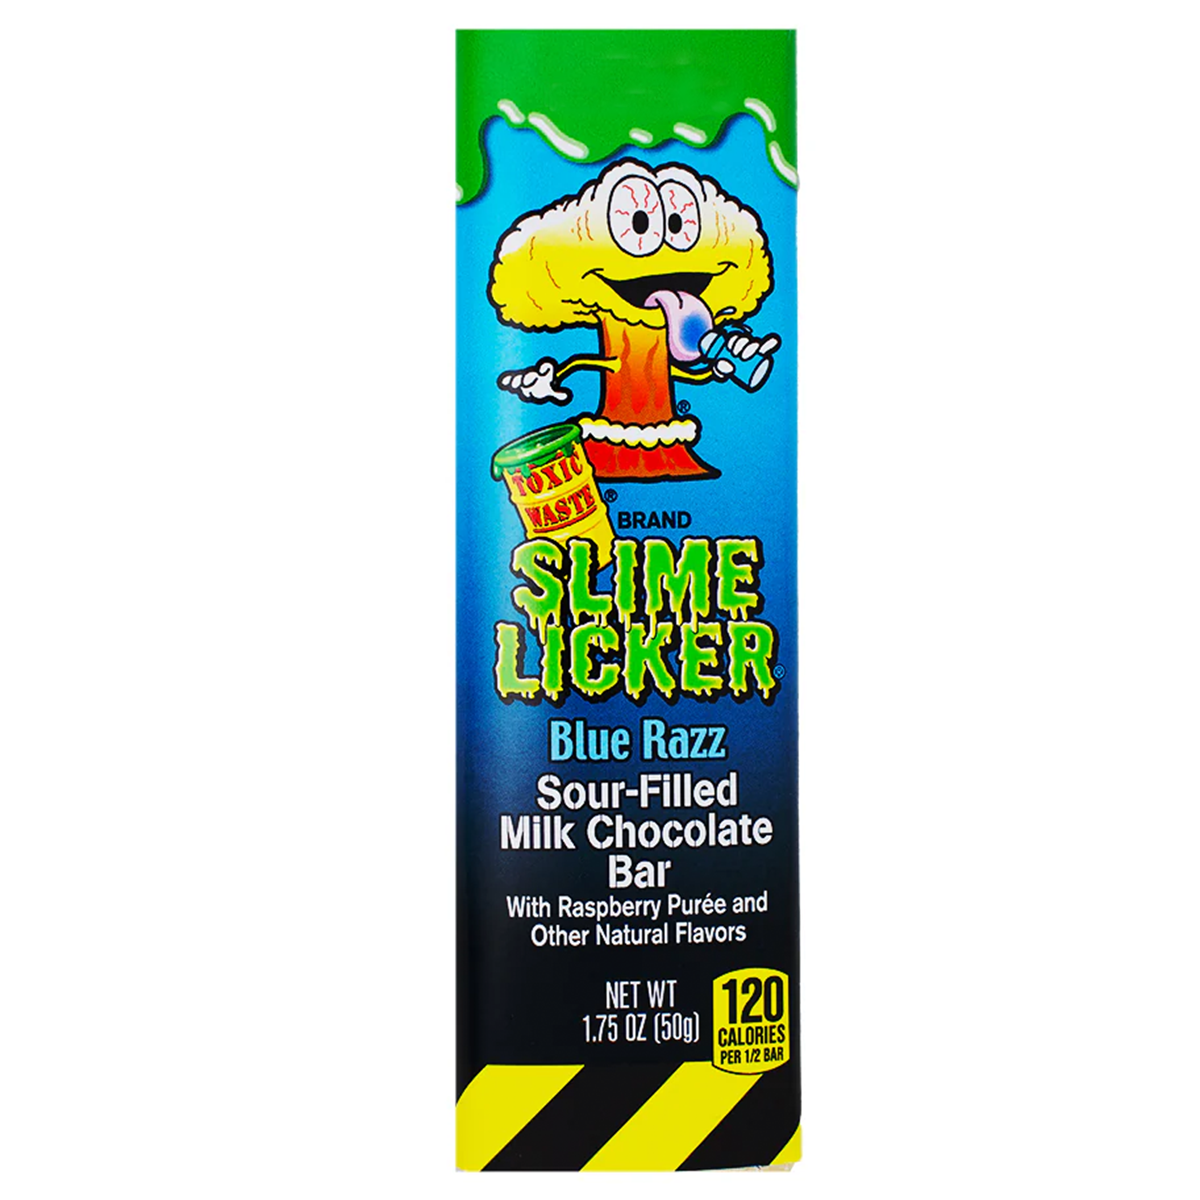 TOXIC WASTE® Brand Slime Licker Blue Razz Sour-Filled Milk Chocolate Bar